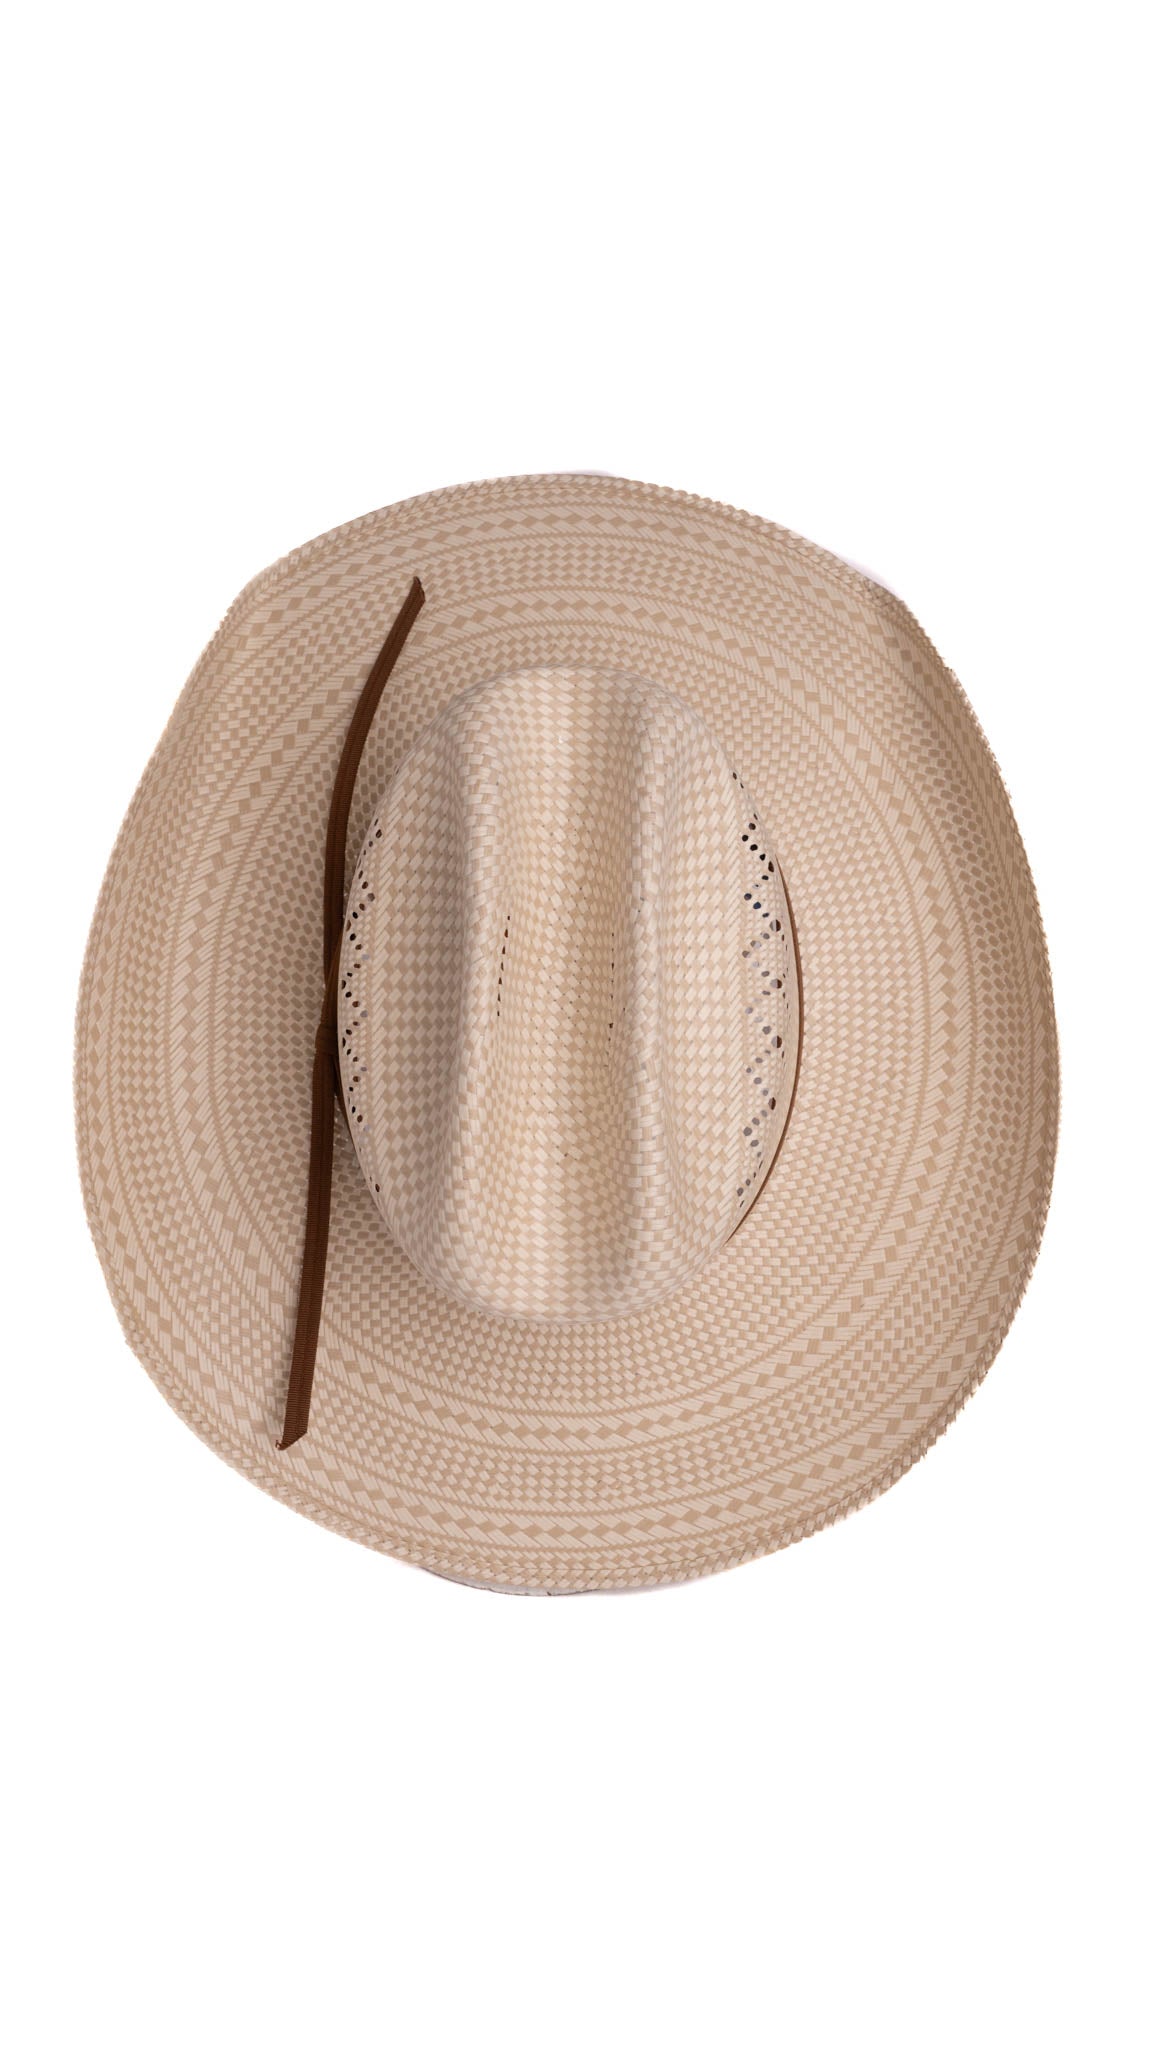 Mexicali Minnick 200X Straw Hat